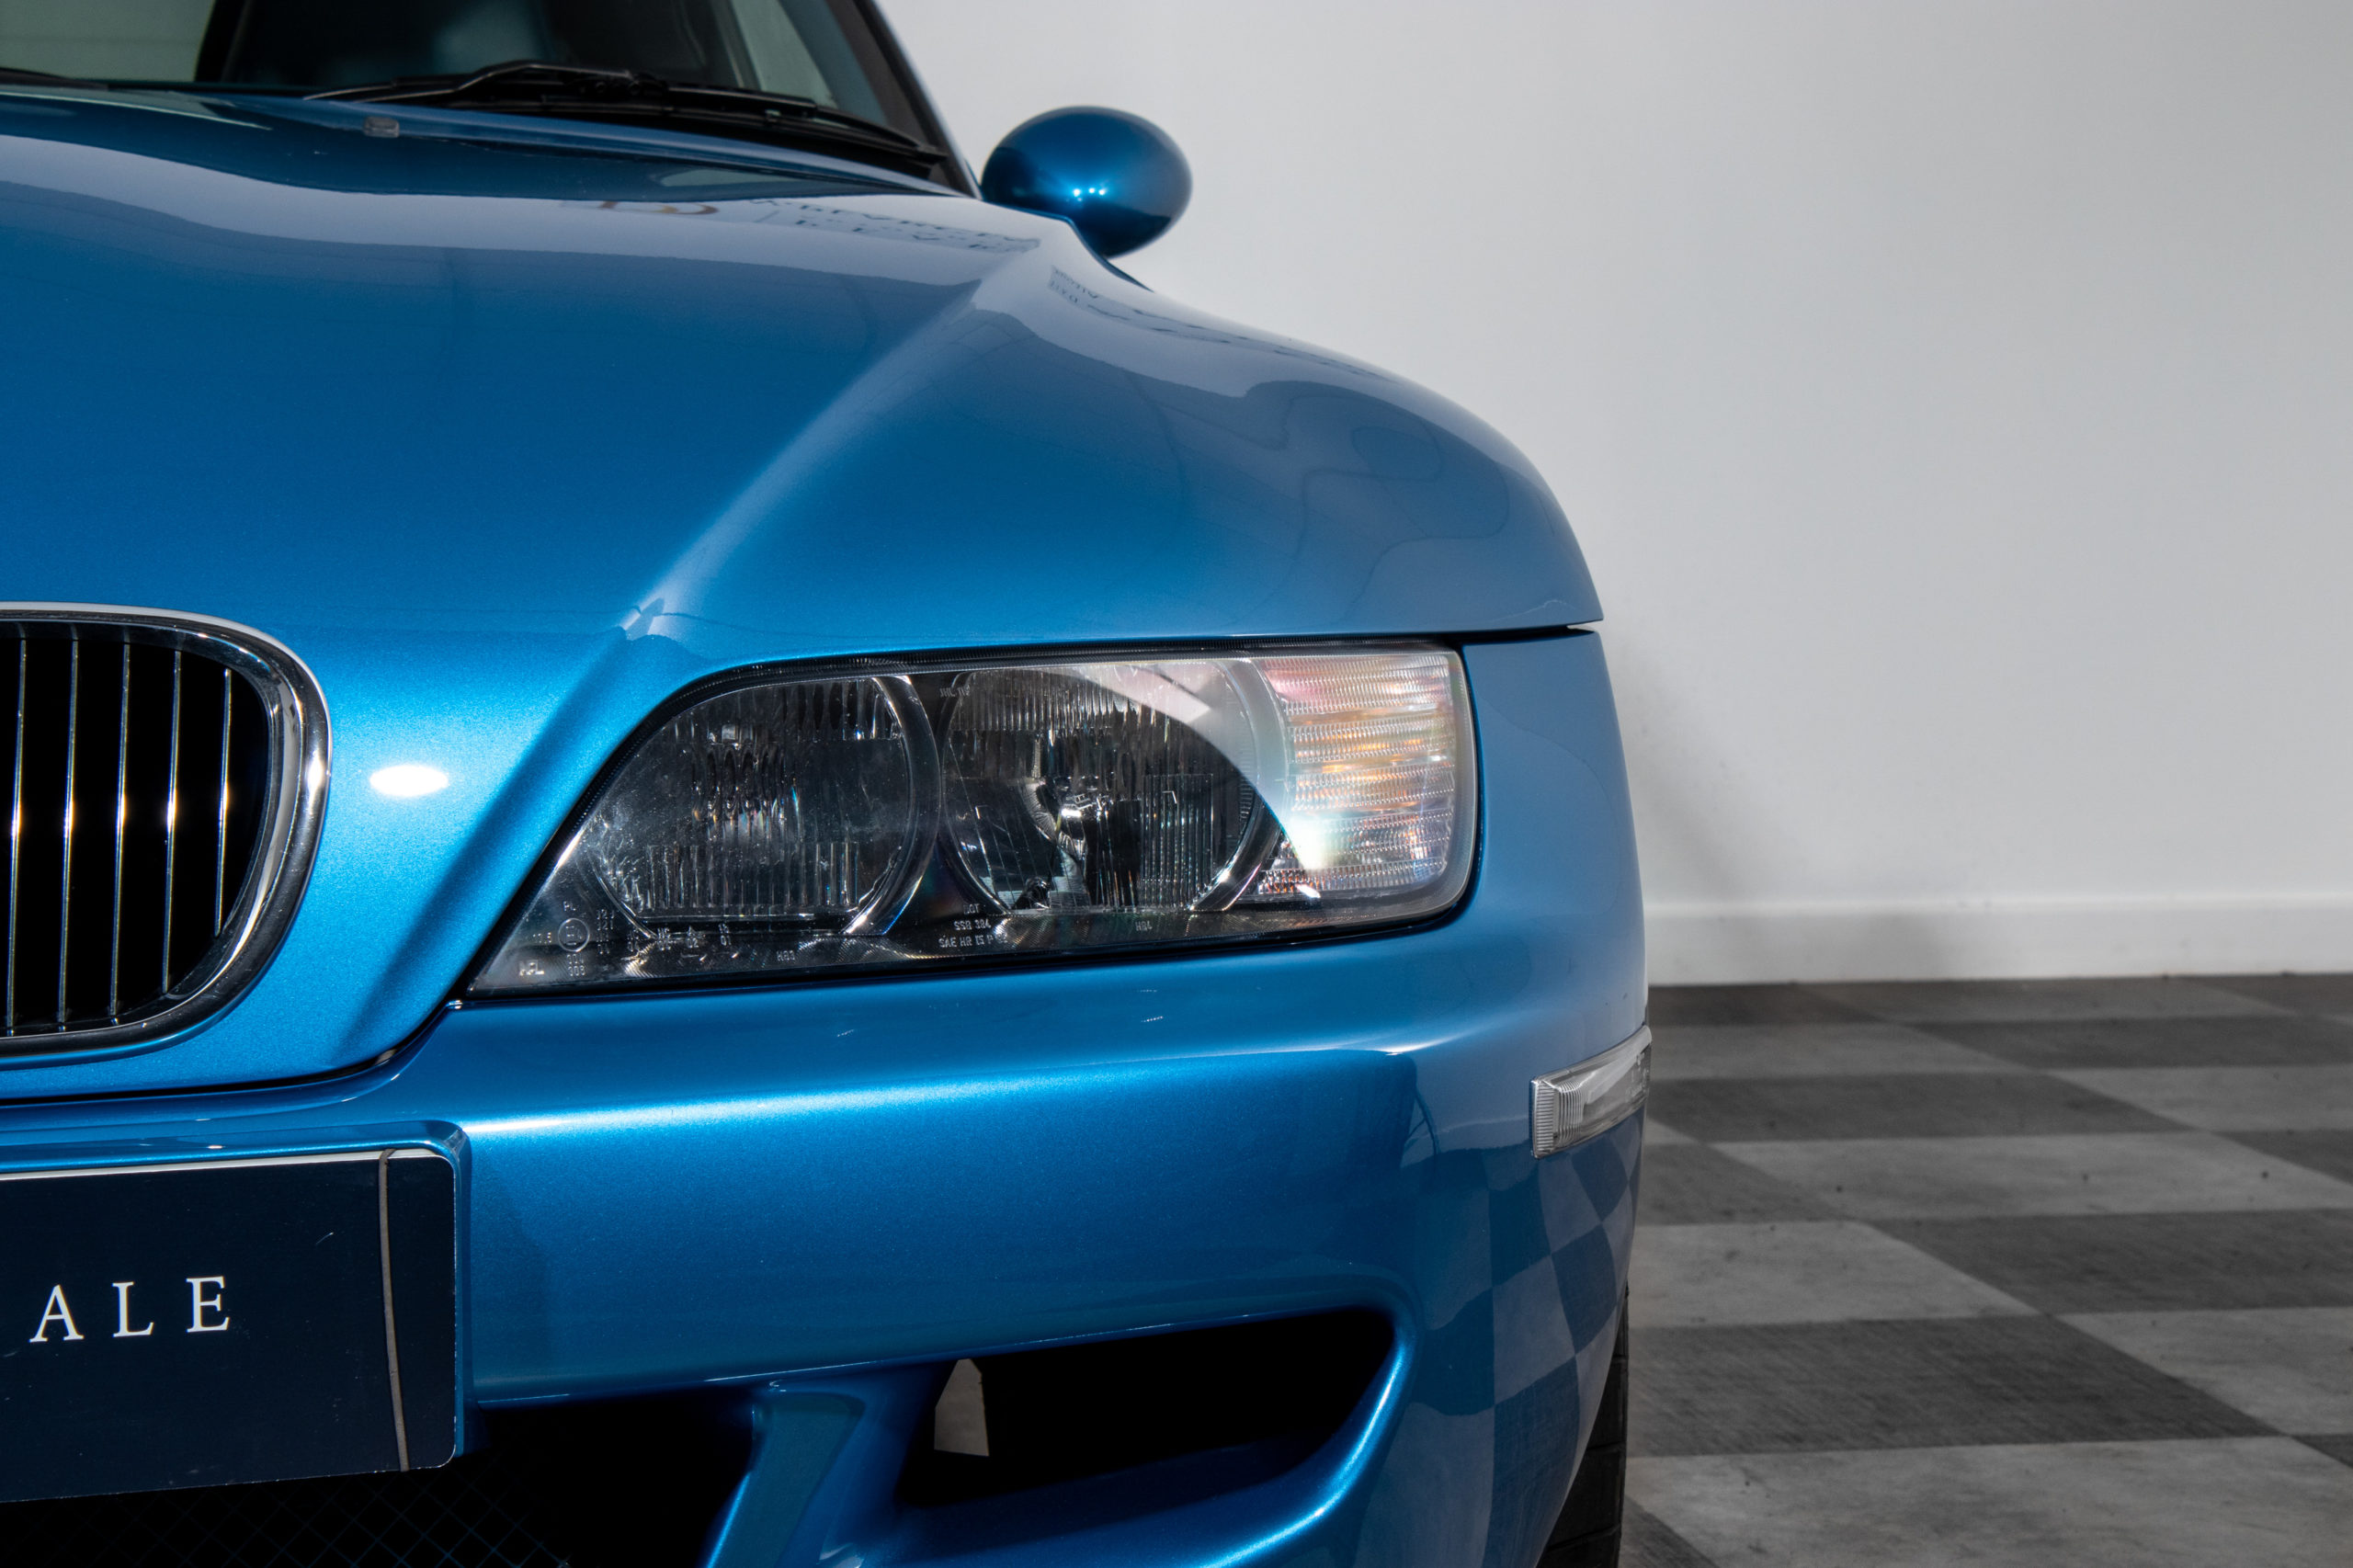 BMW Z3 M Roadster  Spotted - PistonHeads UK